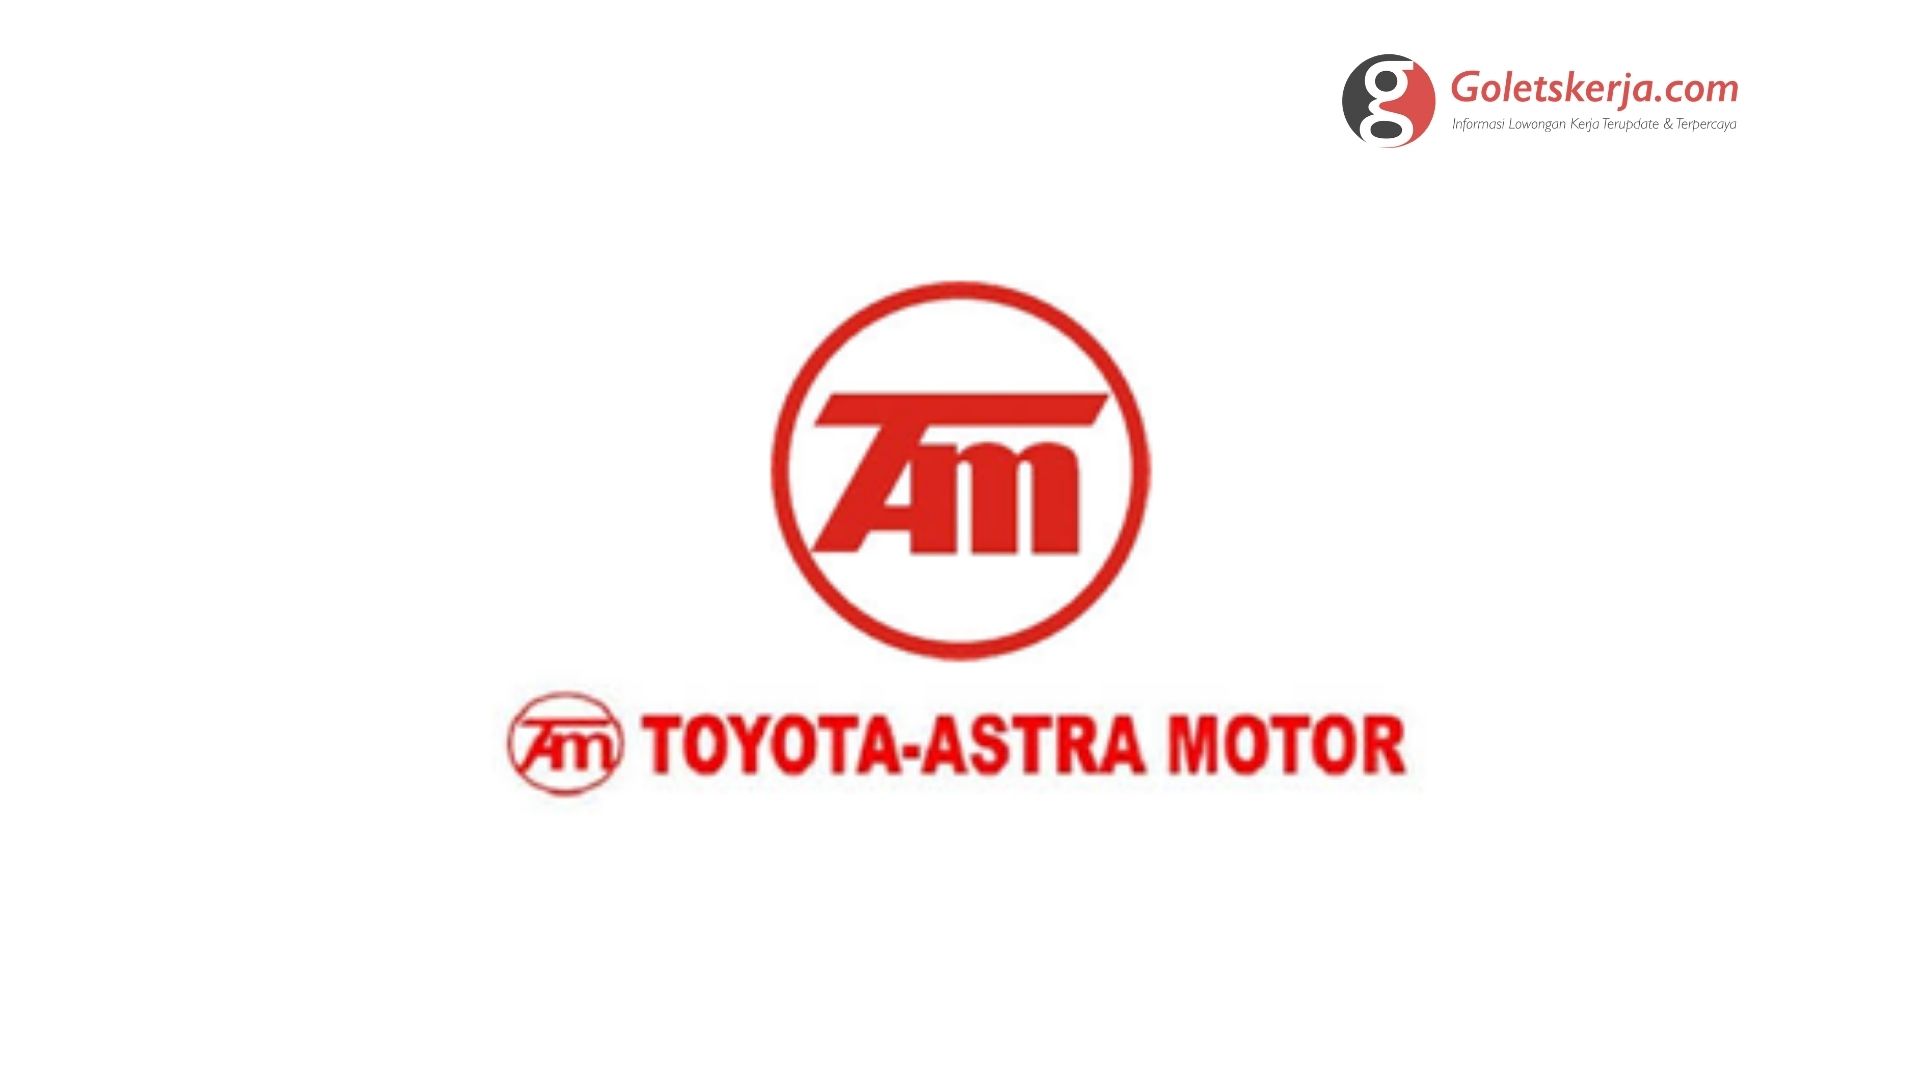 Lowongan Kerja PT Toyota Astra Motor Goletskerja com